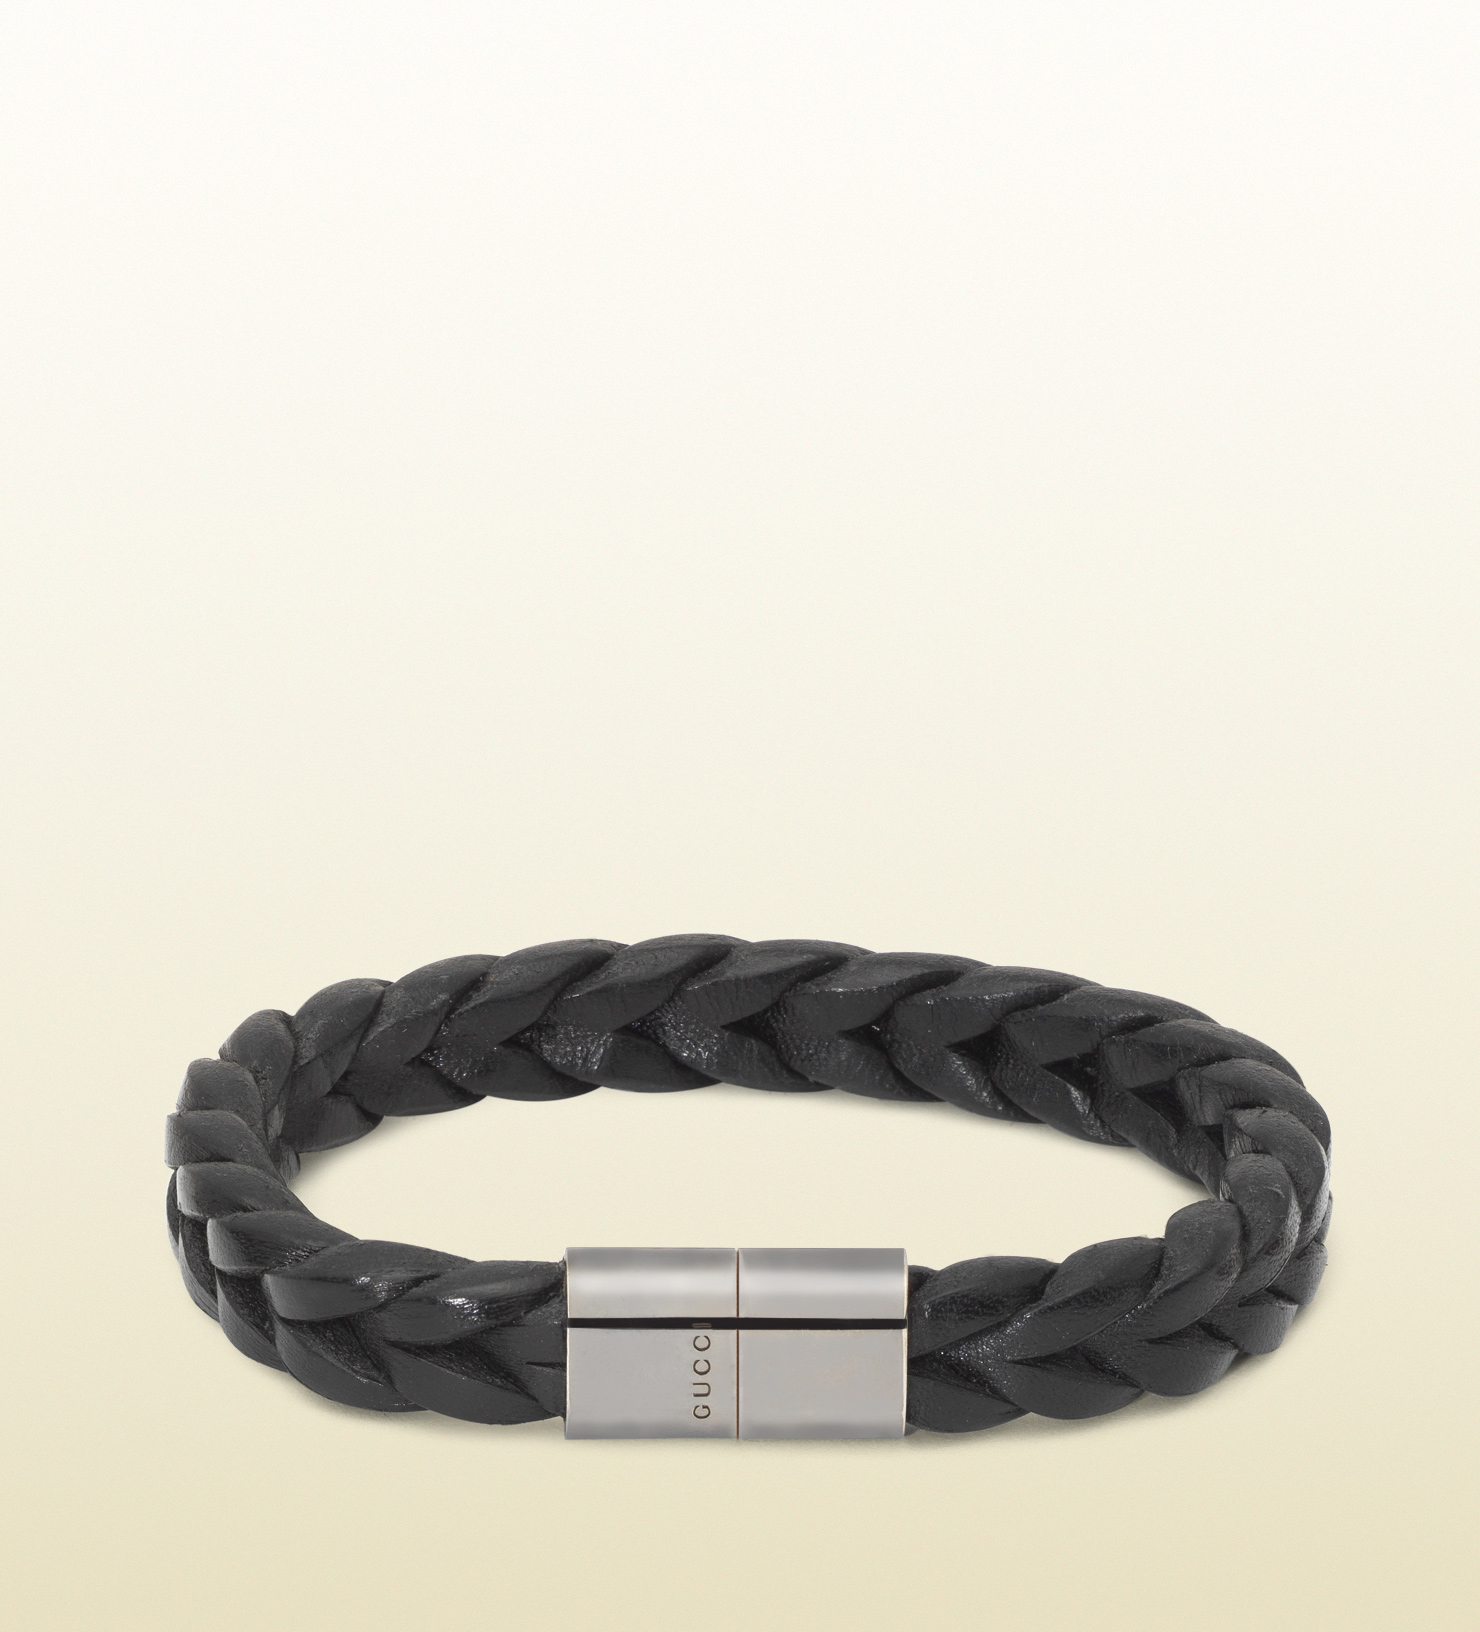 Lyst - Gucci Black Woven Leather Bracelet in Black for Men